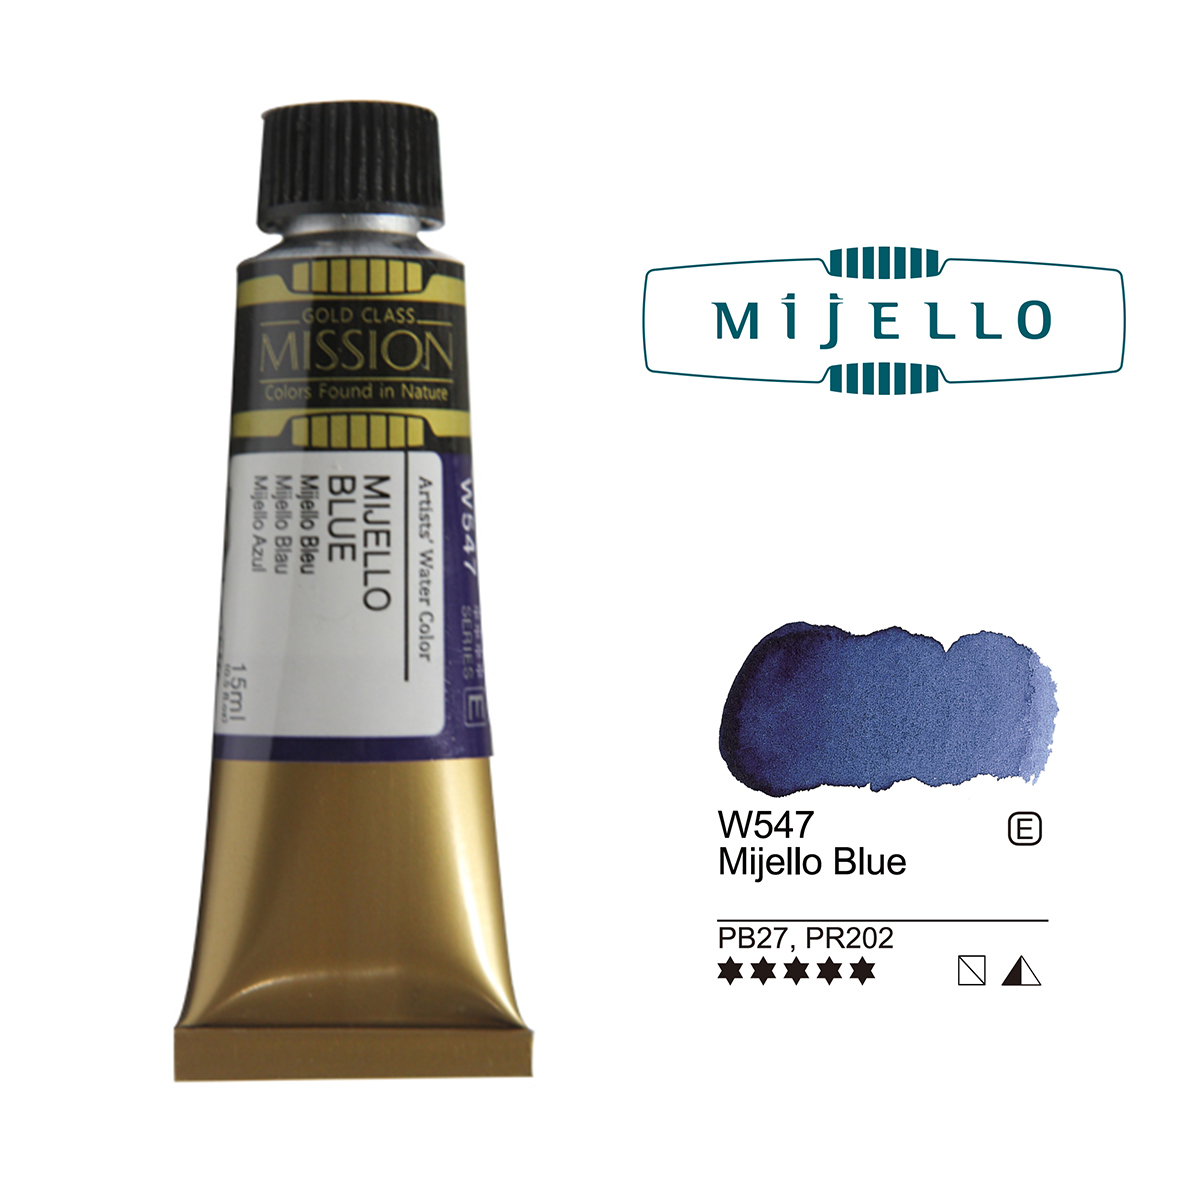 mijero голубой (Mijello Blue) 15ml камера трансмиссия Gold Class ( прозрачный акварель краситель )mijero